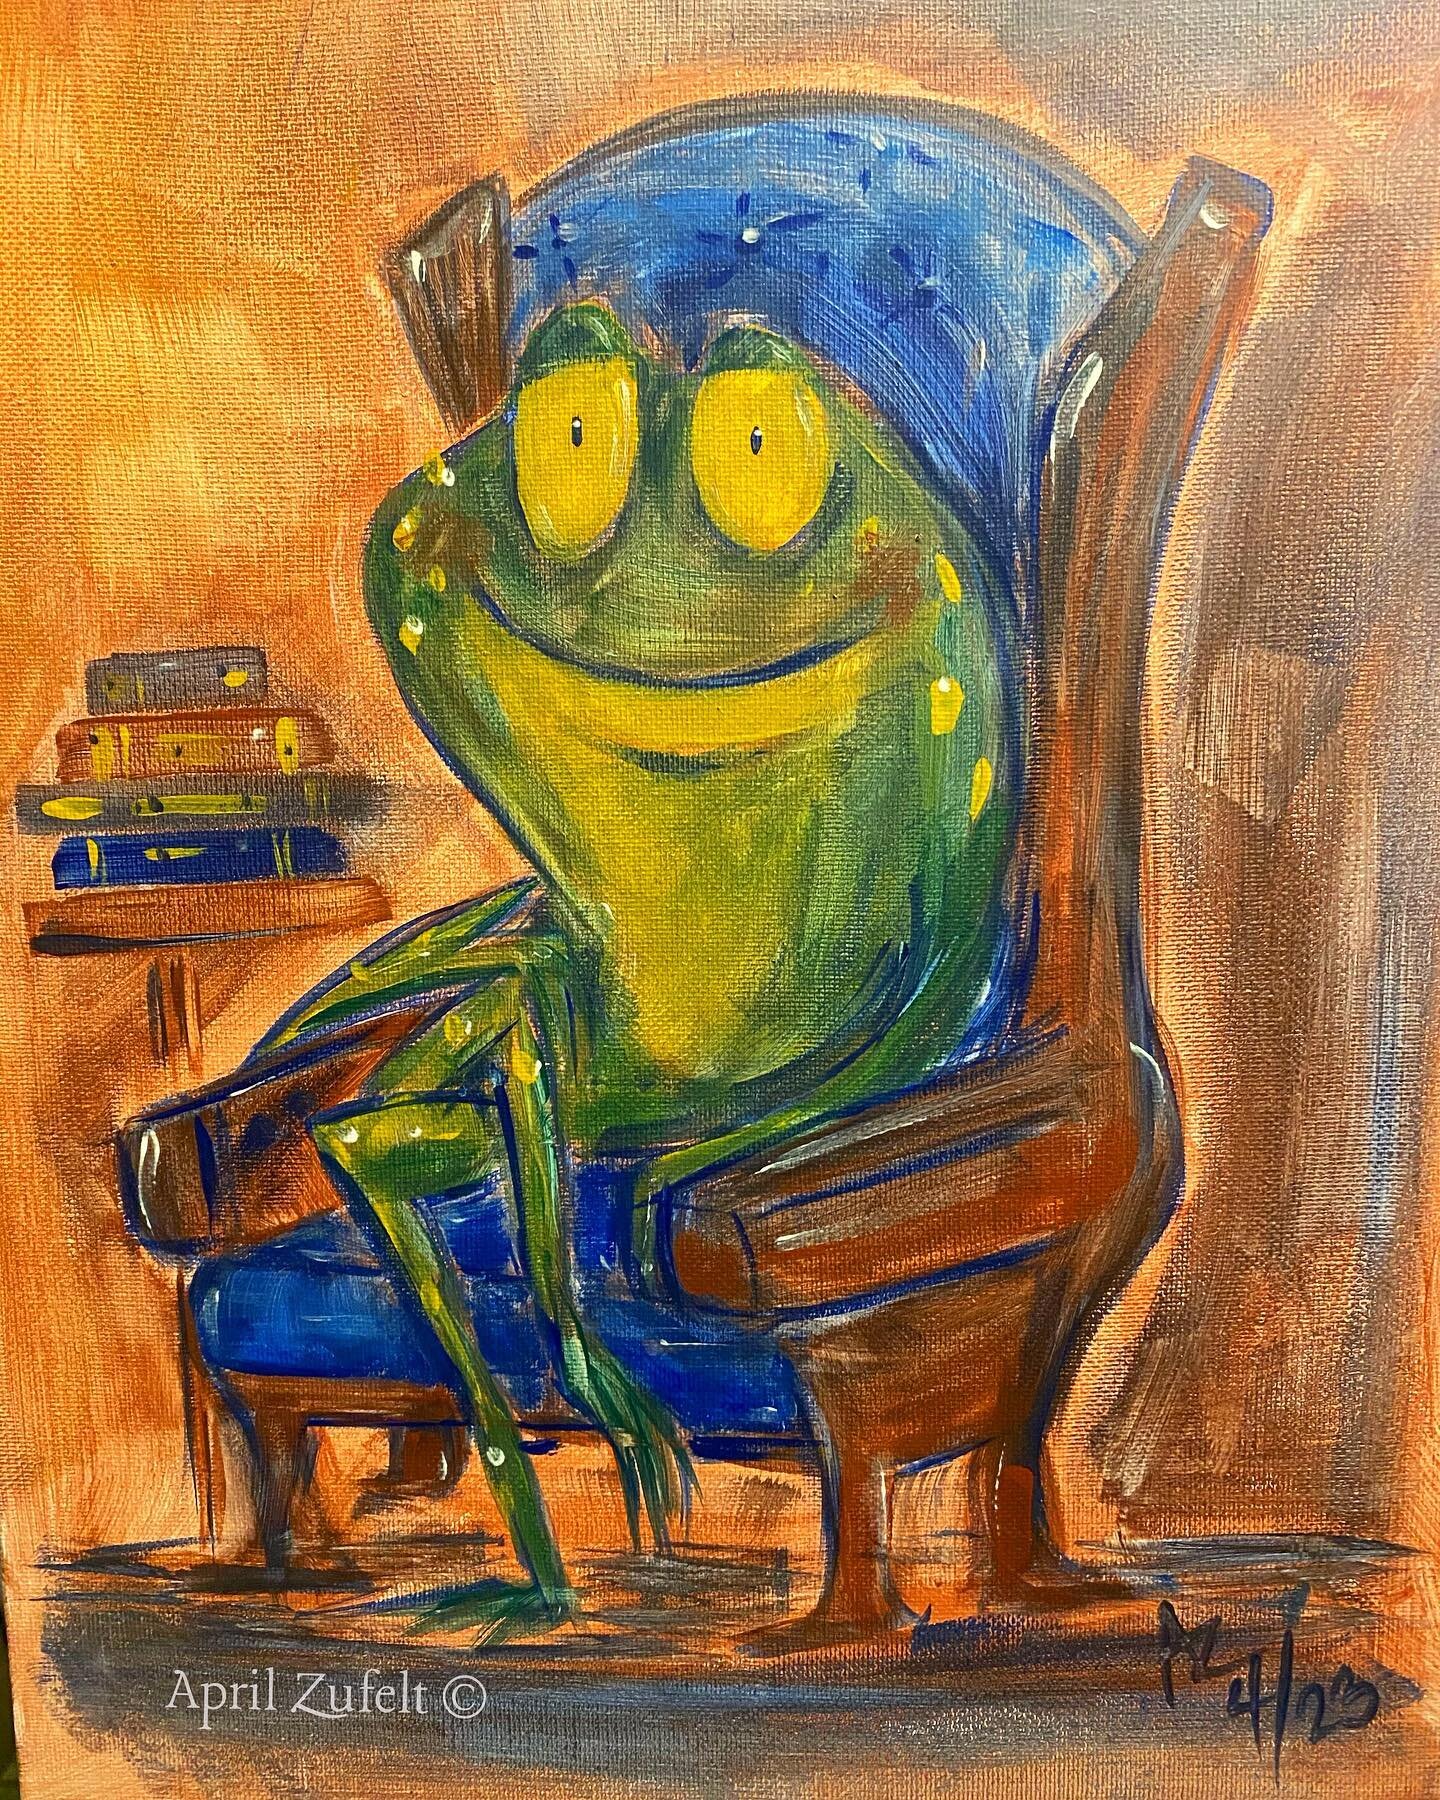 Every frog needs a reading chair...🐸📚🪑
.
.
.
.

#kidlitart #kidlitartist #lovebooks #picturebook #childrensbookart #artist #childrensbookillustration #childrensbookillustrator #art  #instaart #bookart #instaartist #artistsofinstagram #sketch 
#acr